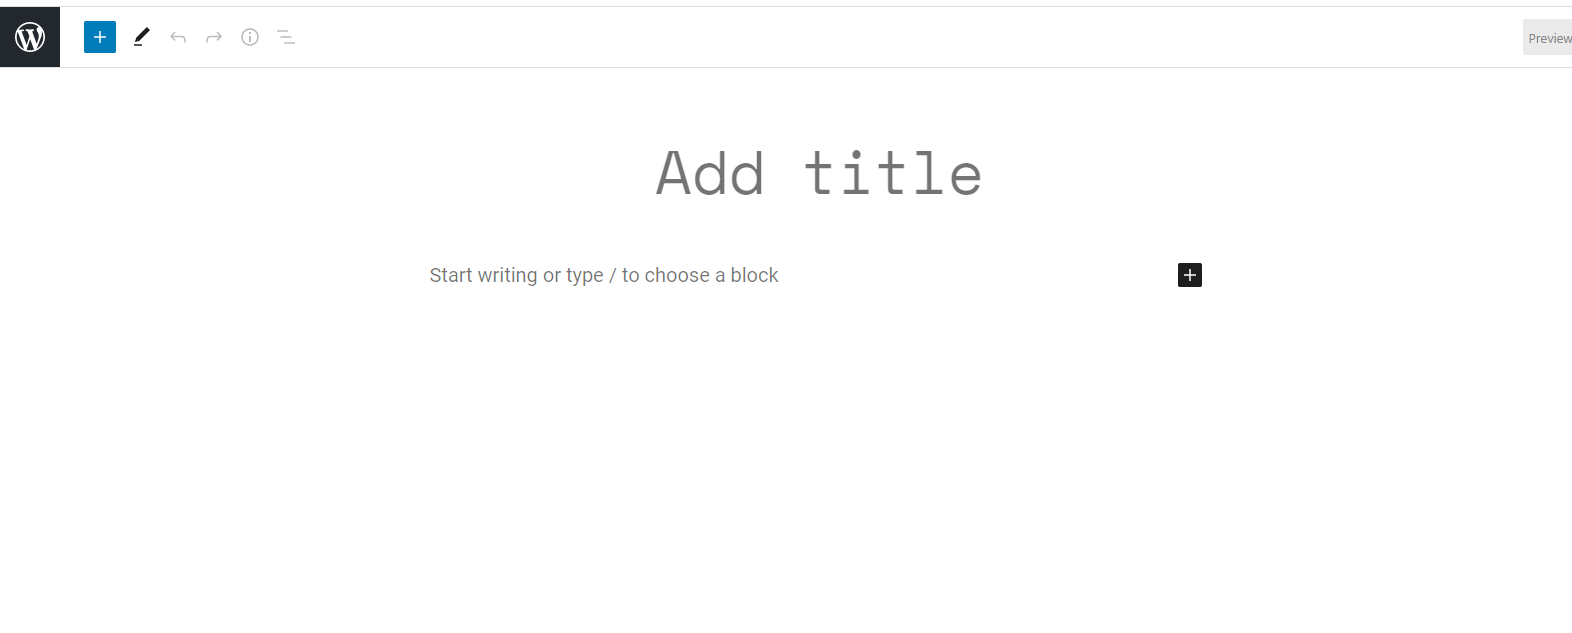 Click on plus icon to add a new block in WordPress editor